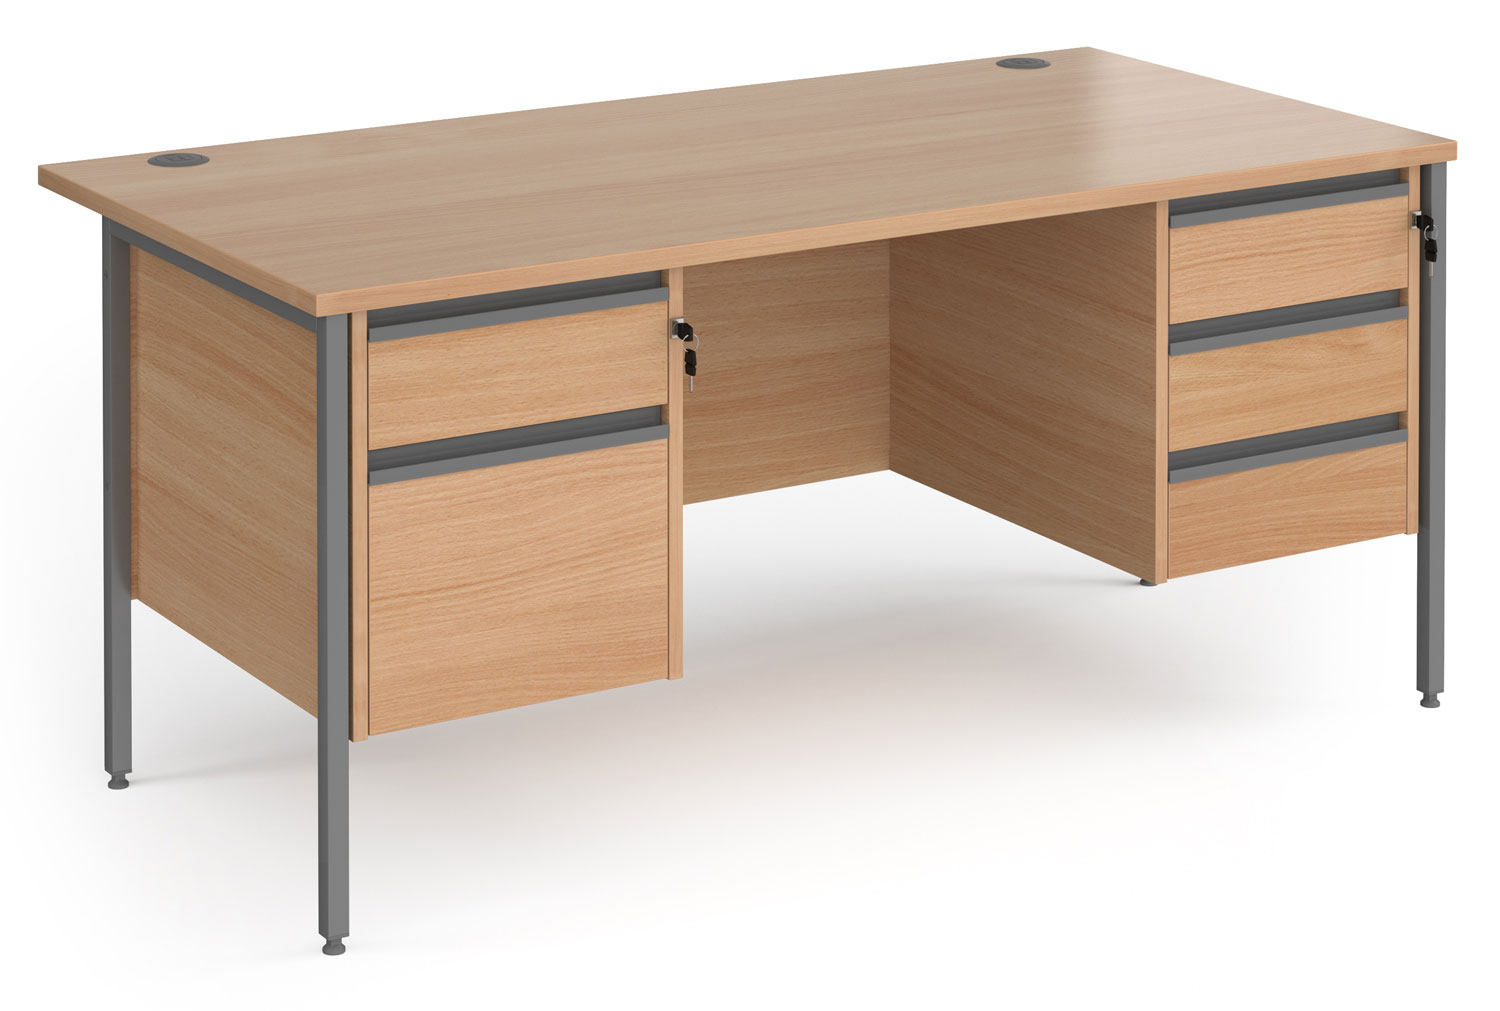 Value Line Classic+ Rectangular H-Leg Office Desk 2+3 Drawers (Graphite Leg), 160wx80dx73h (cm), Beech